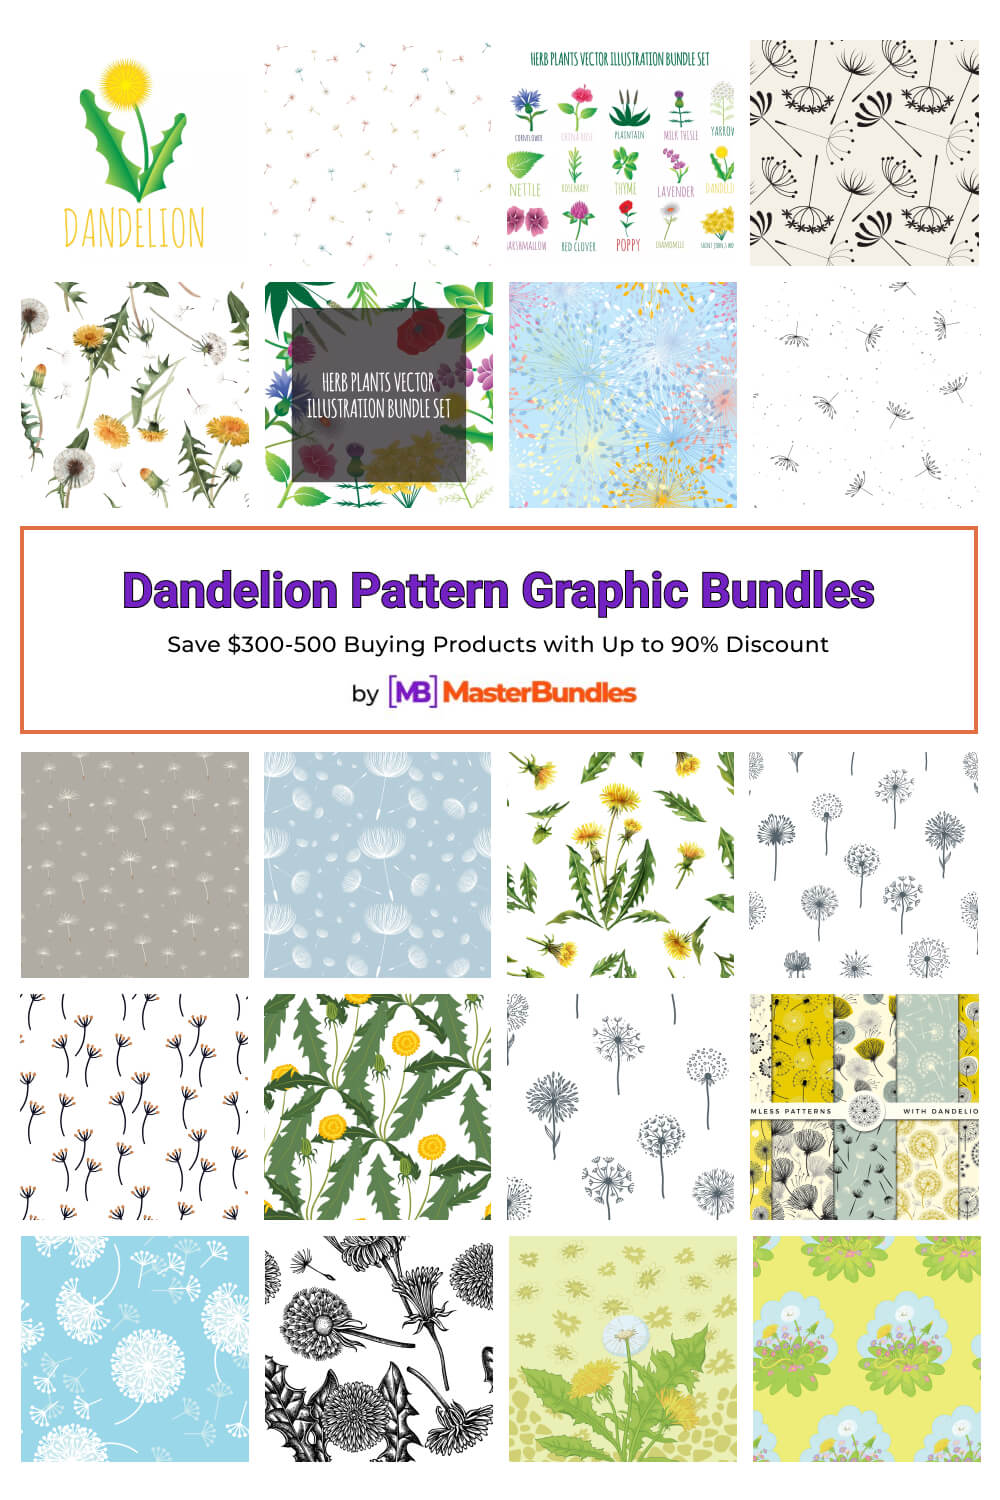 dandelion pattern graphic bundles pinterest image.